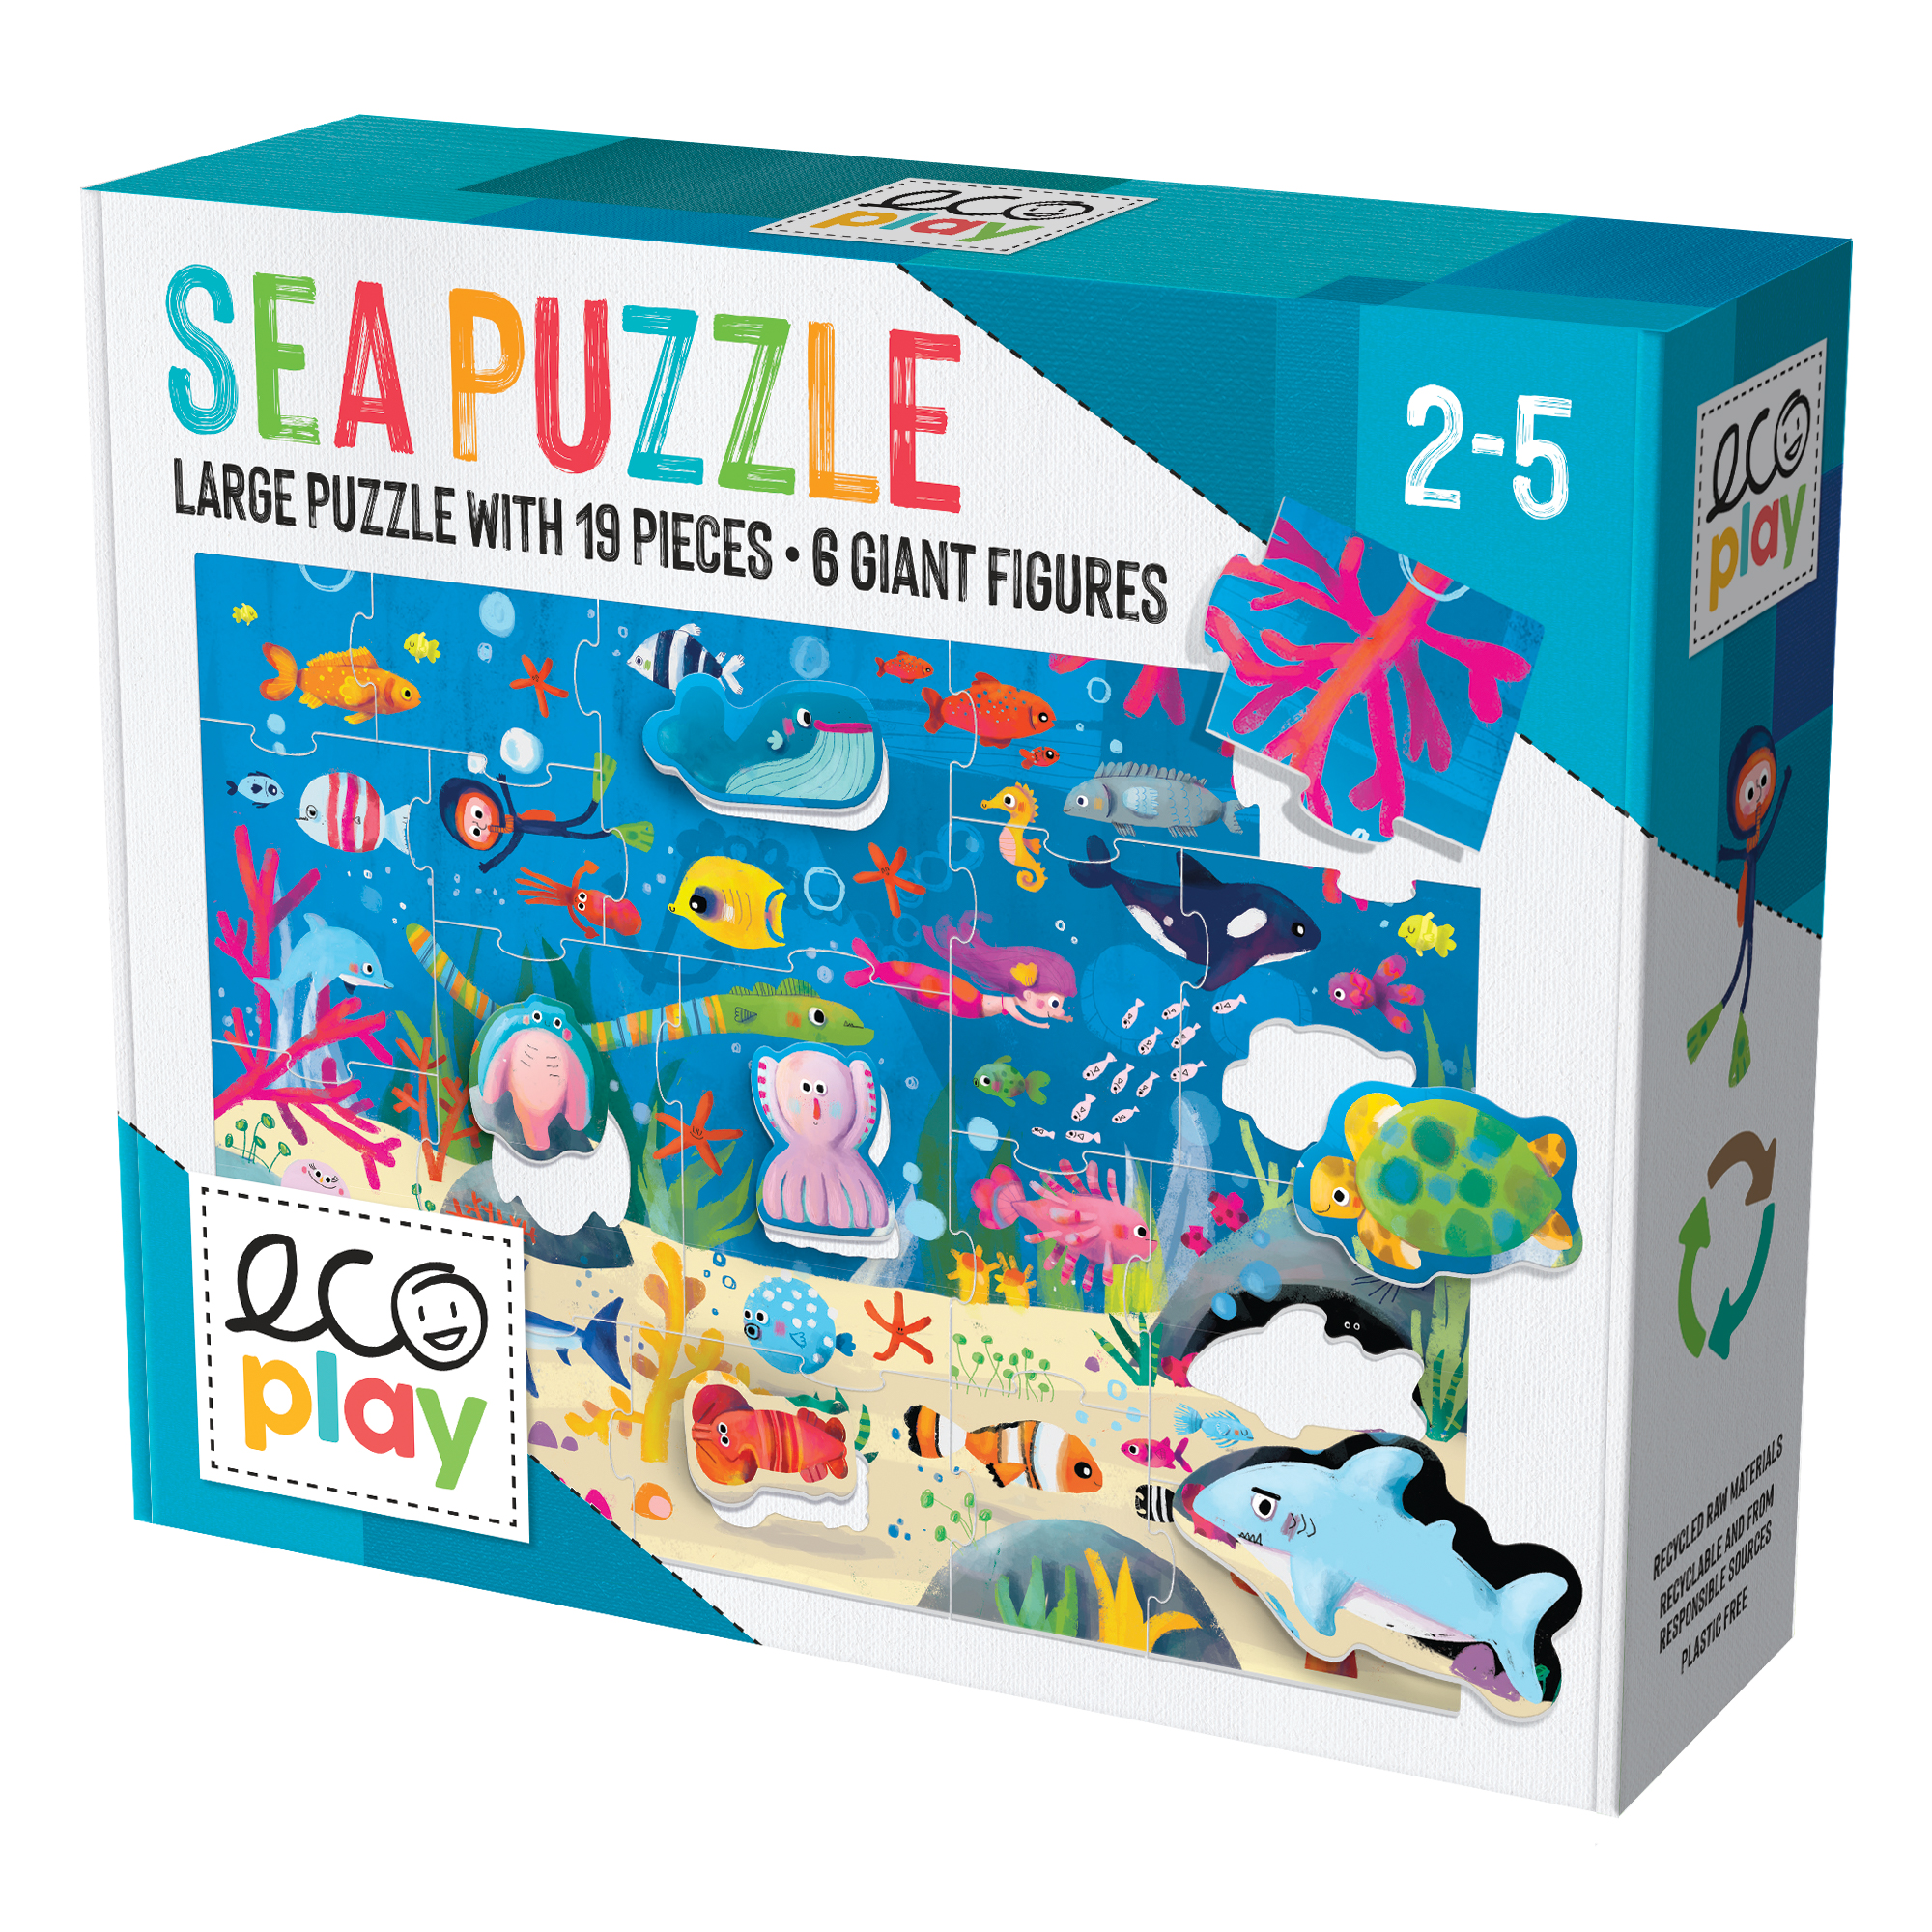 Ecoplay - shapes puzzle sea - HEADU